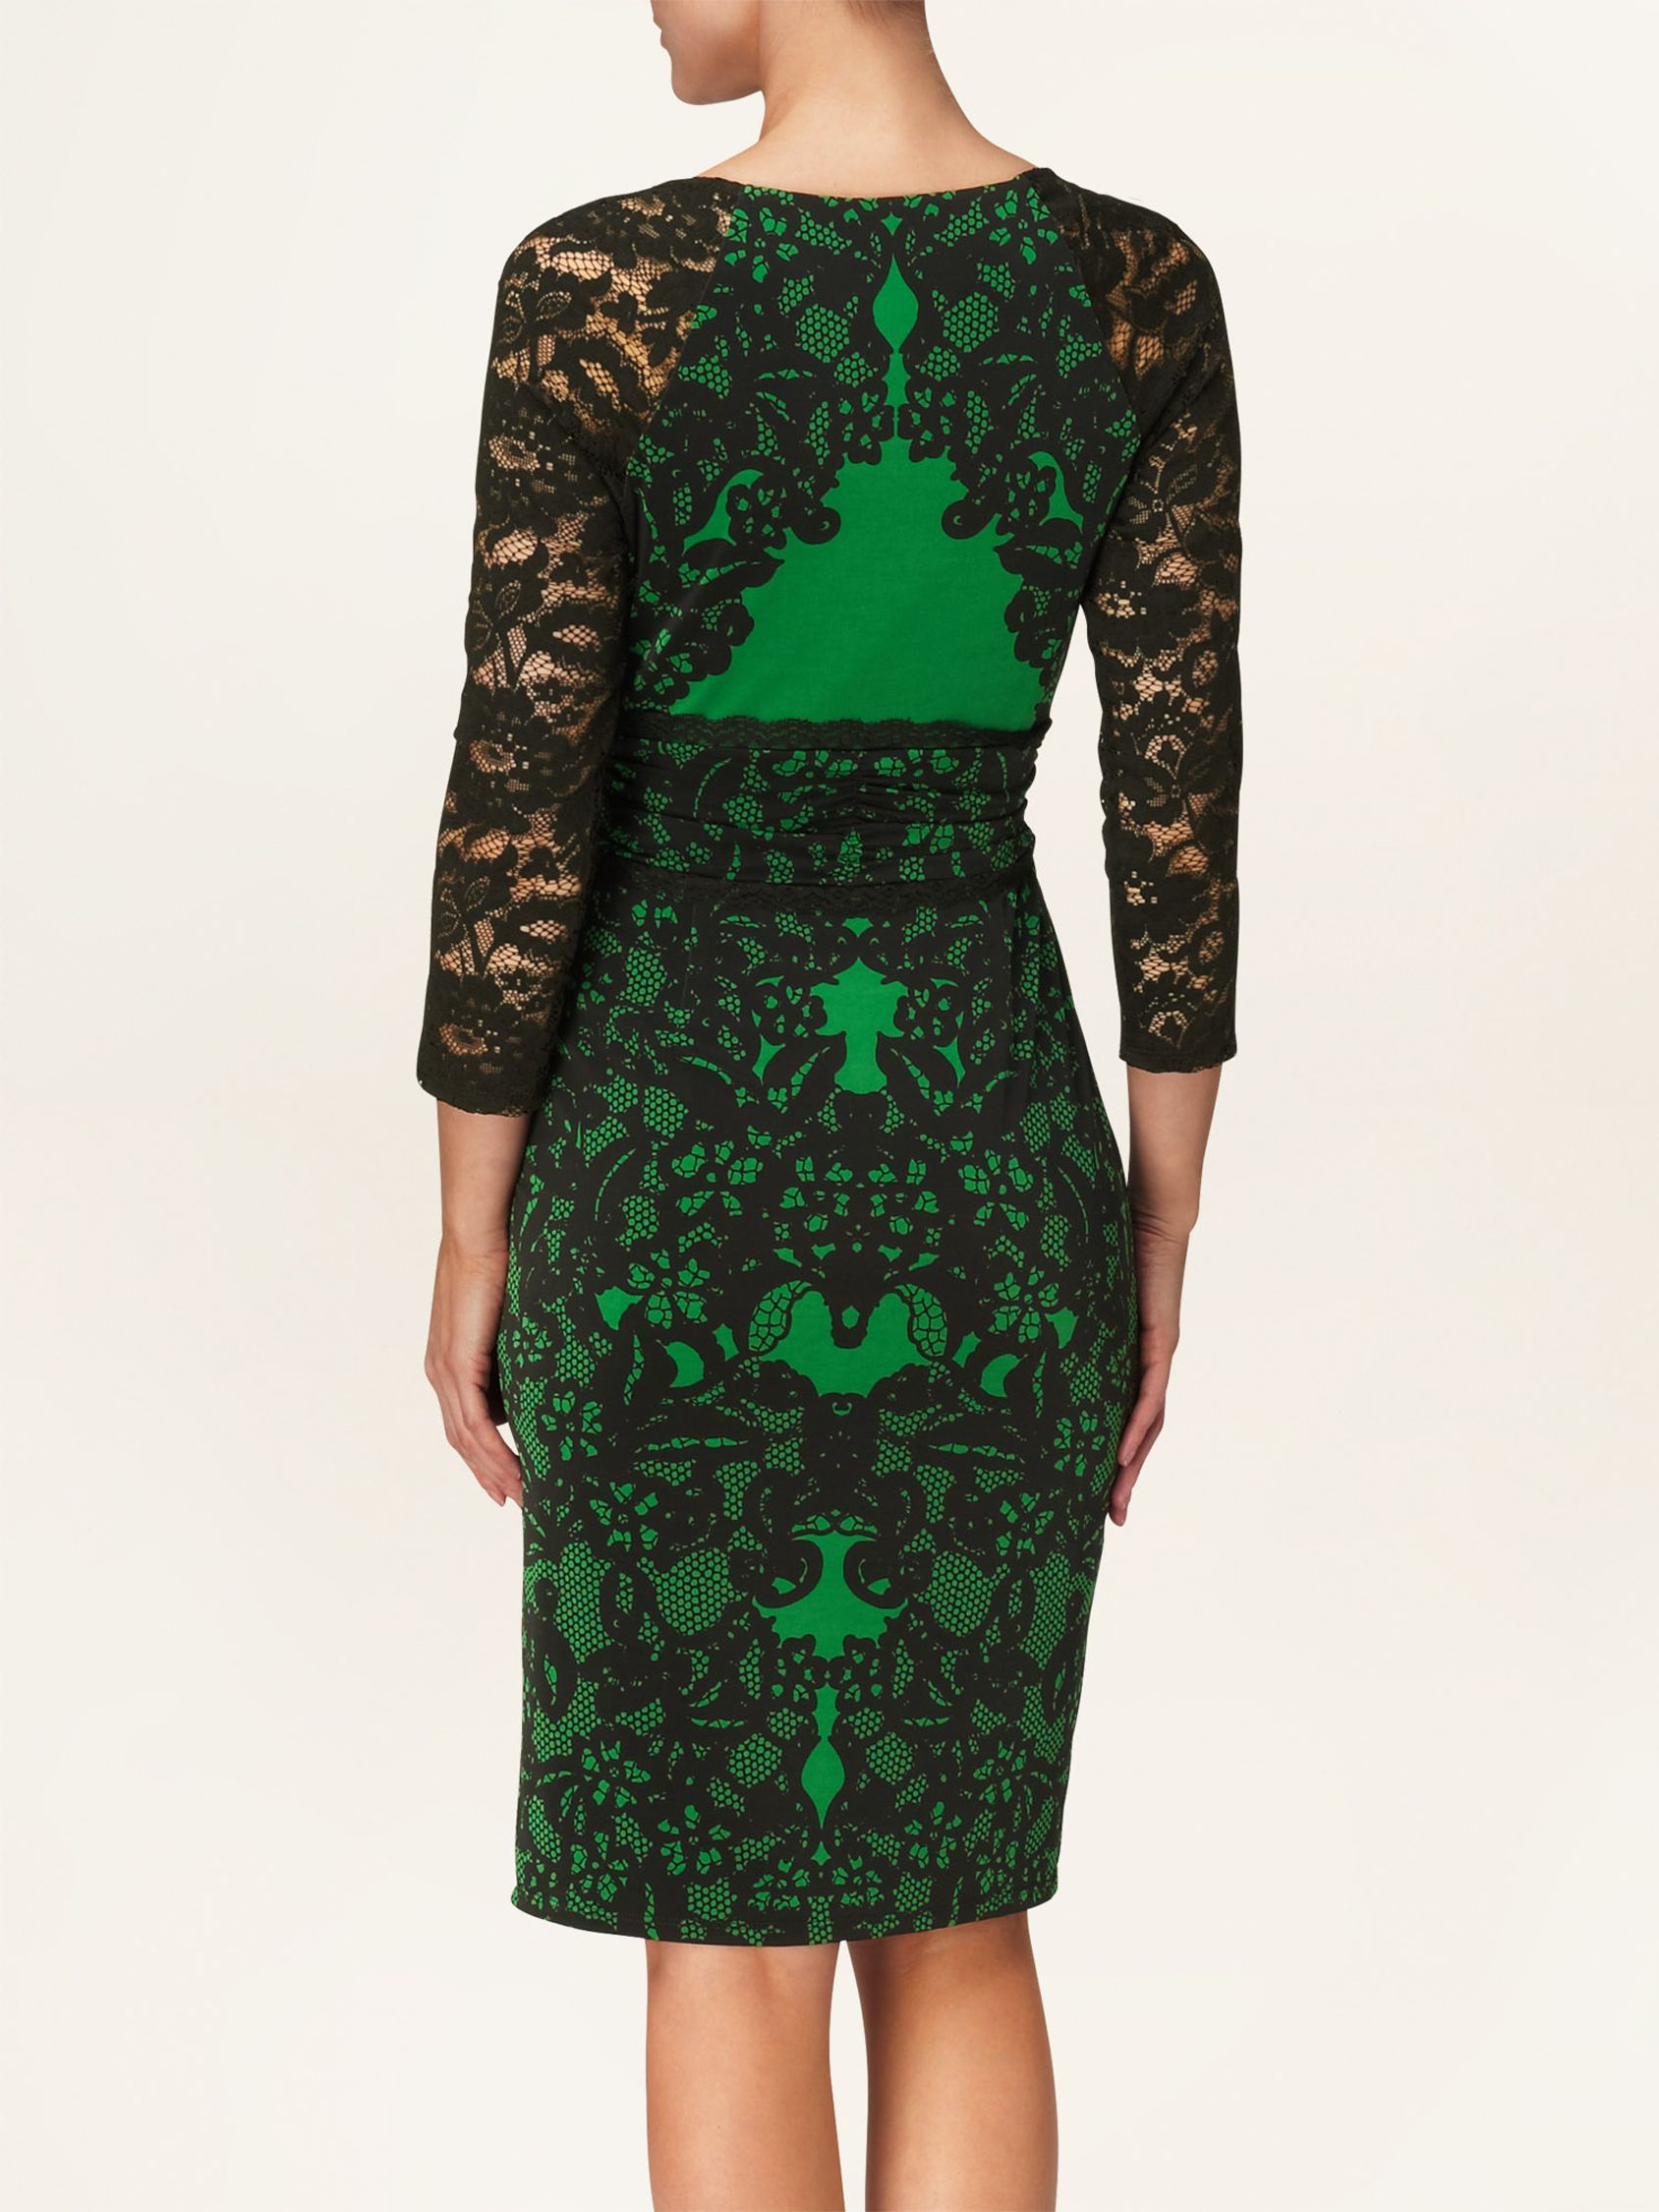 Phase Eight Reena Lace Print Dress, Black/Emerald at John Lewis & Partners